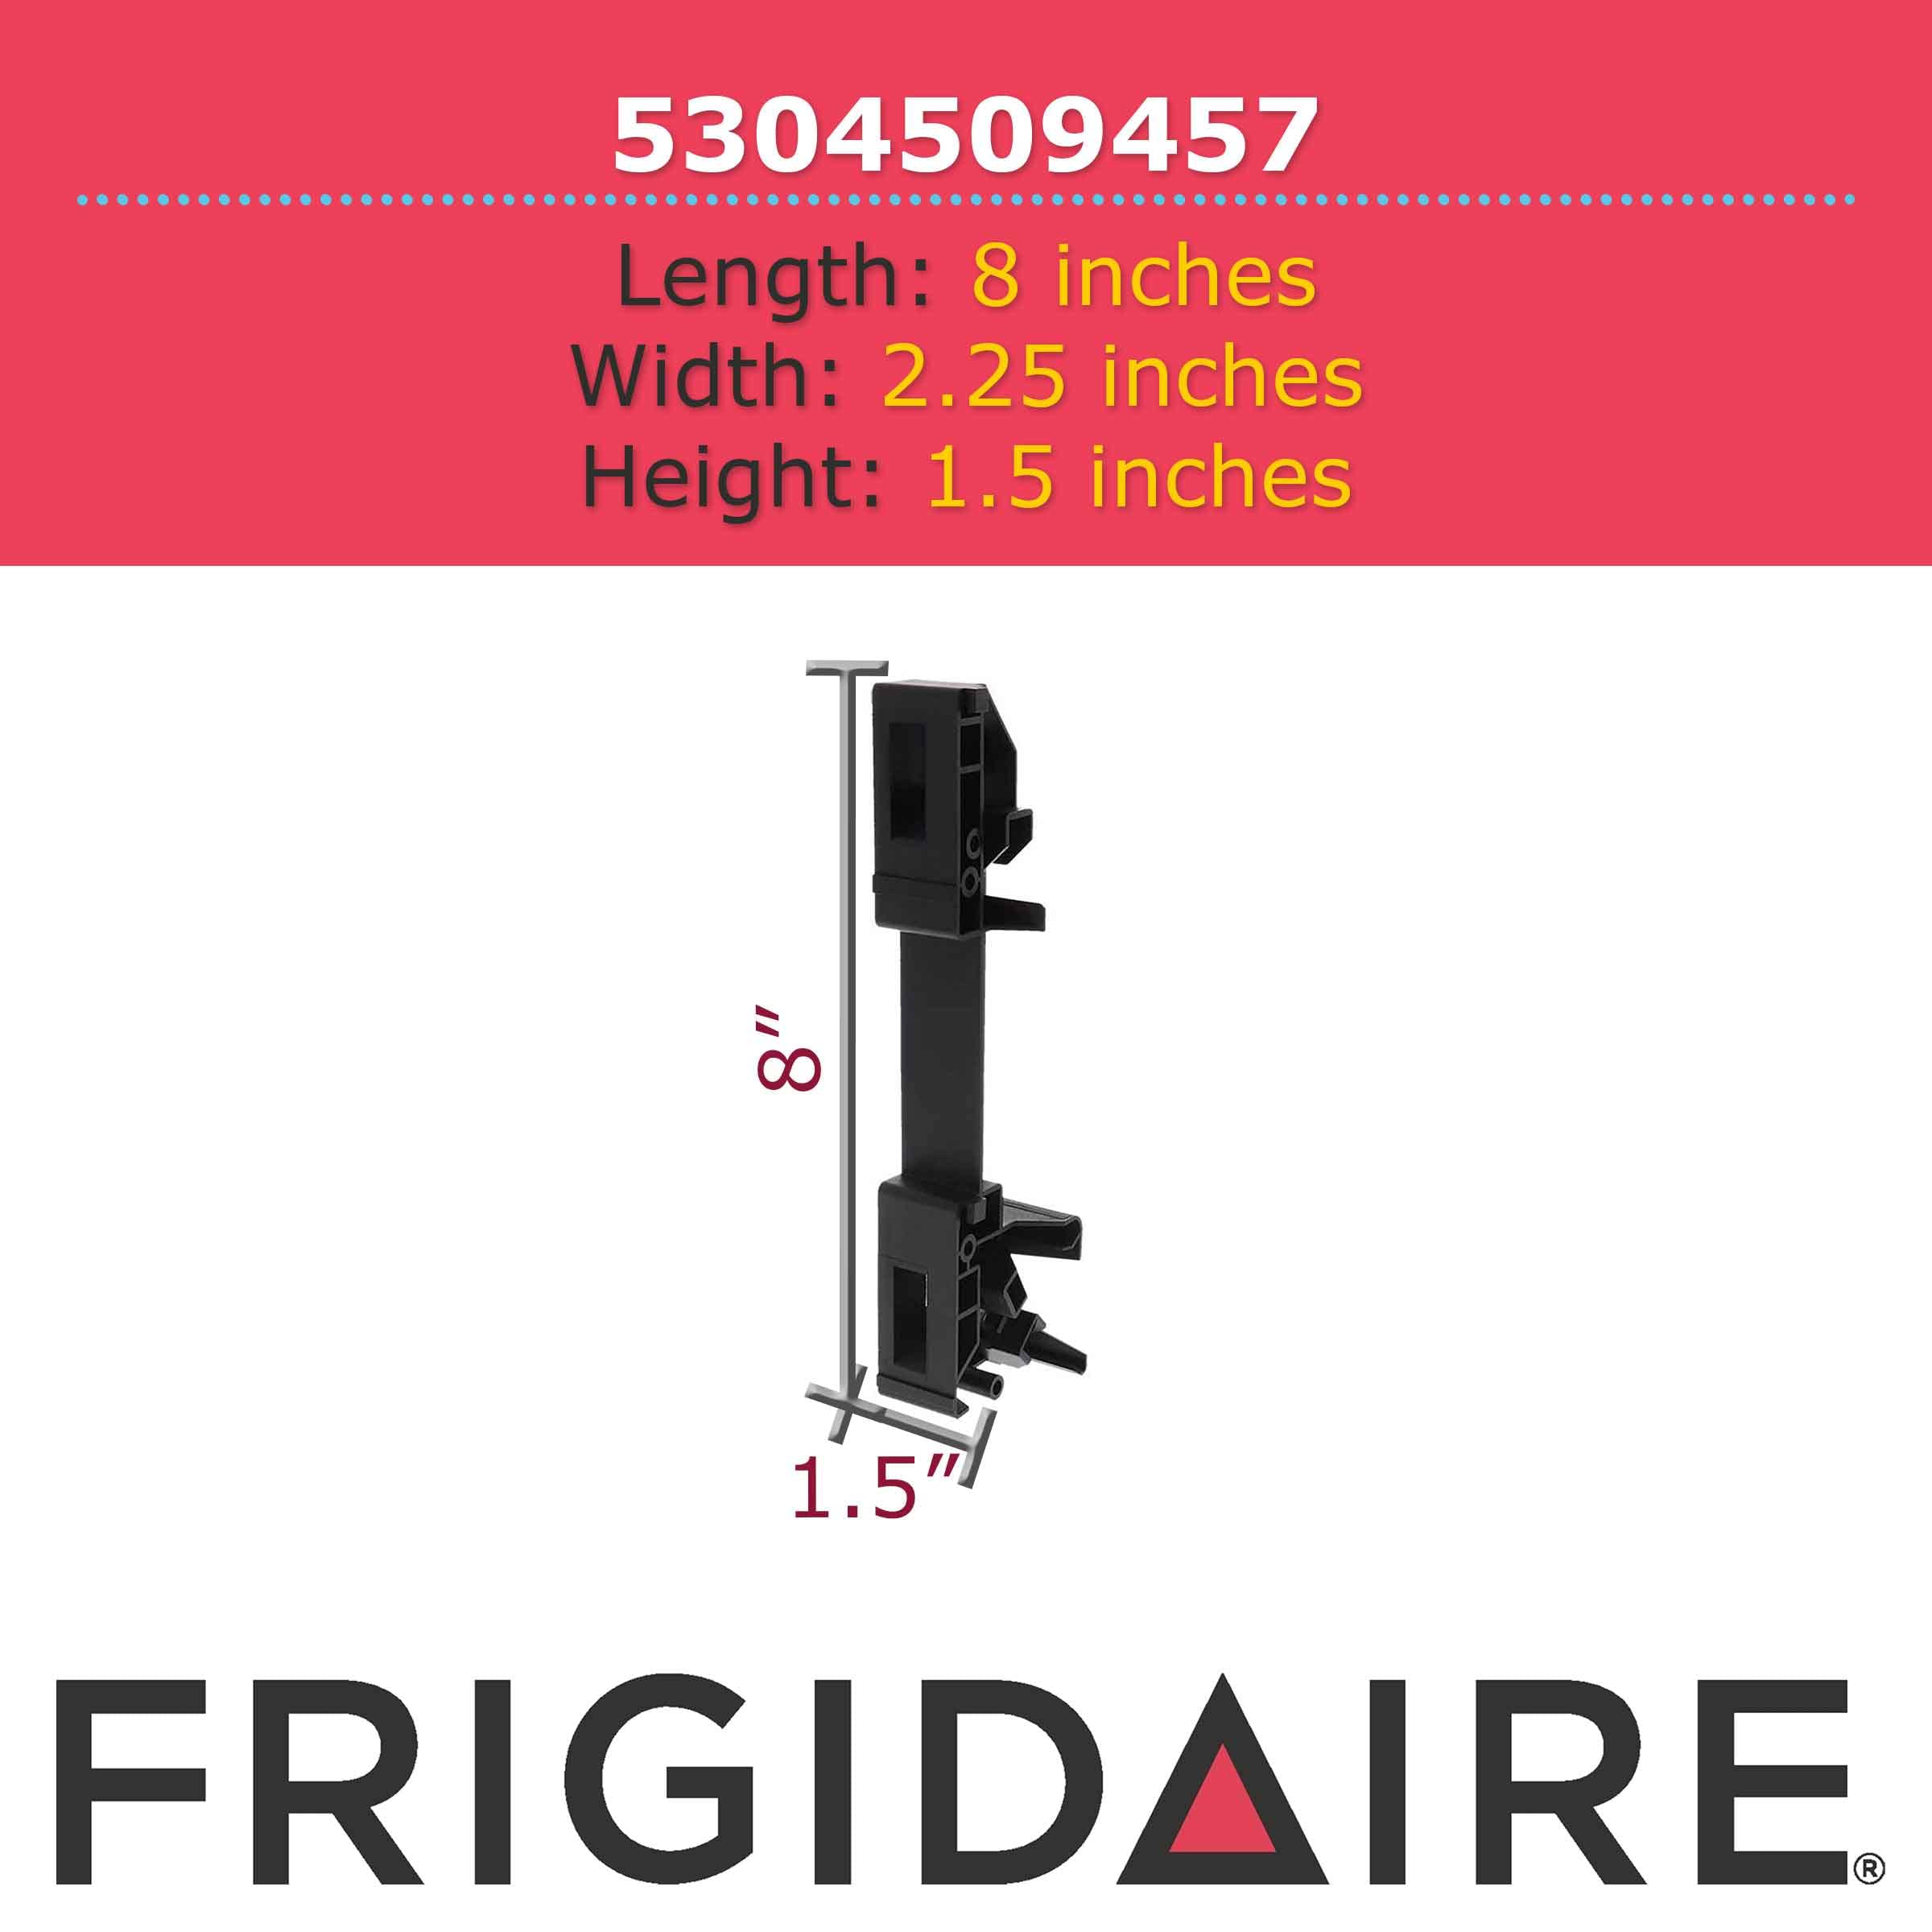 Frigidaire 5304509457 Switch Holder